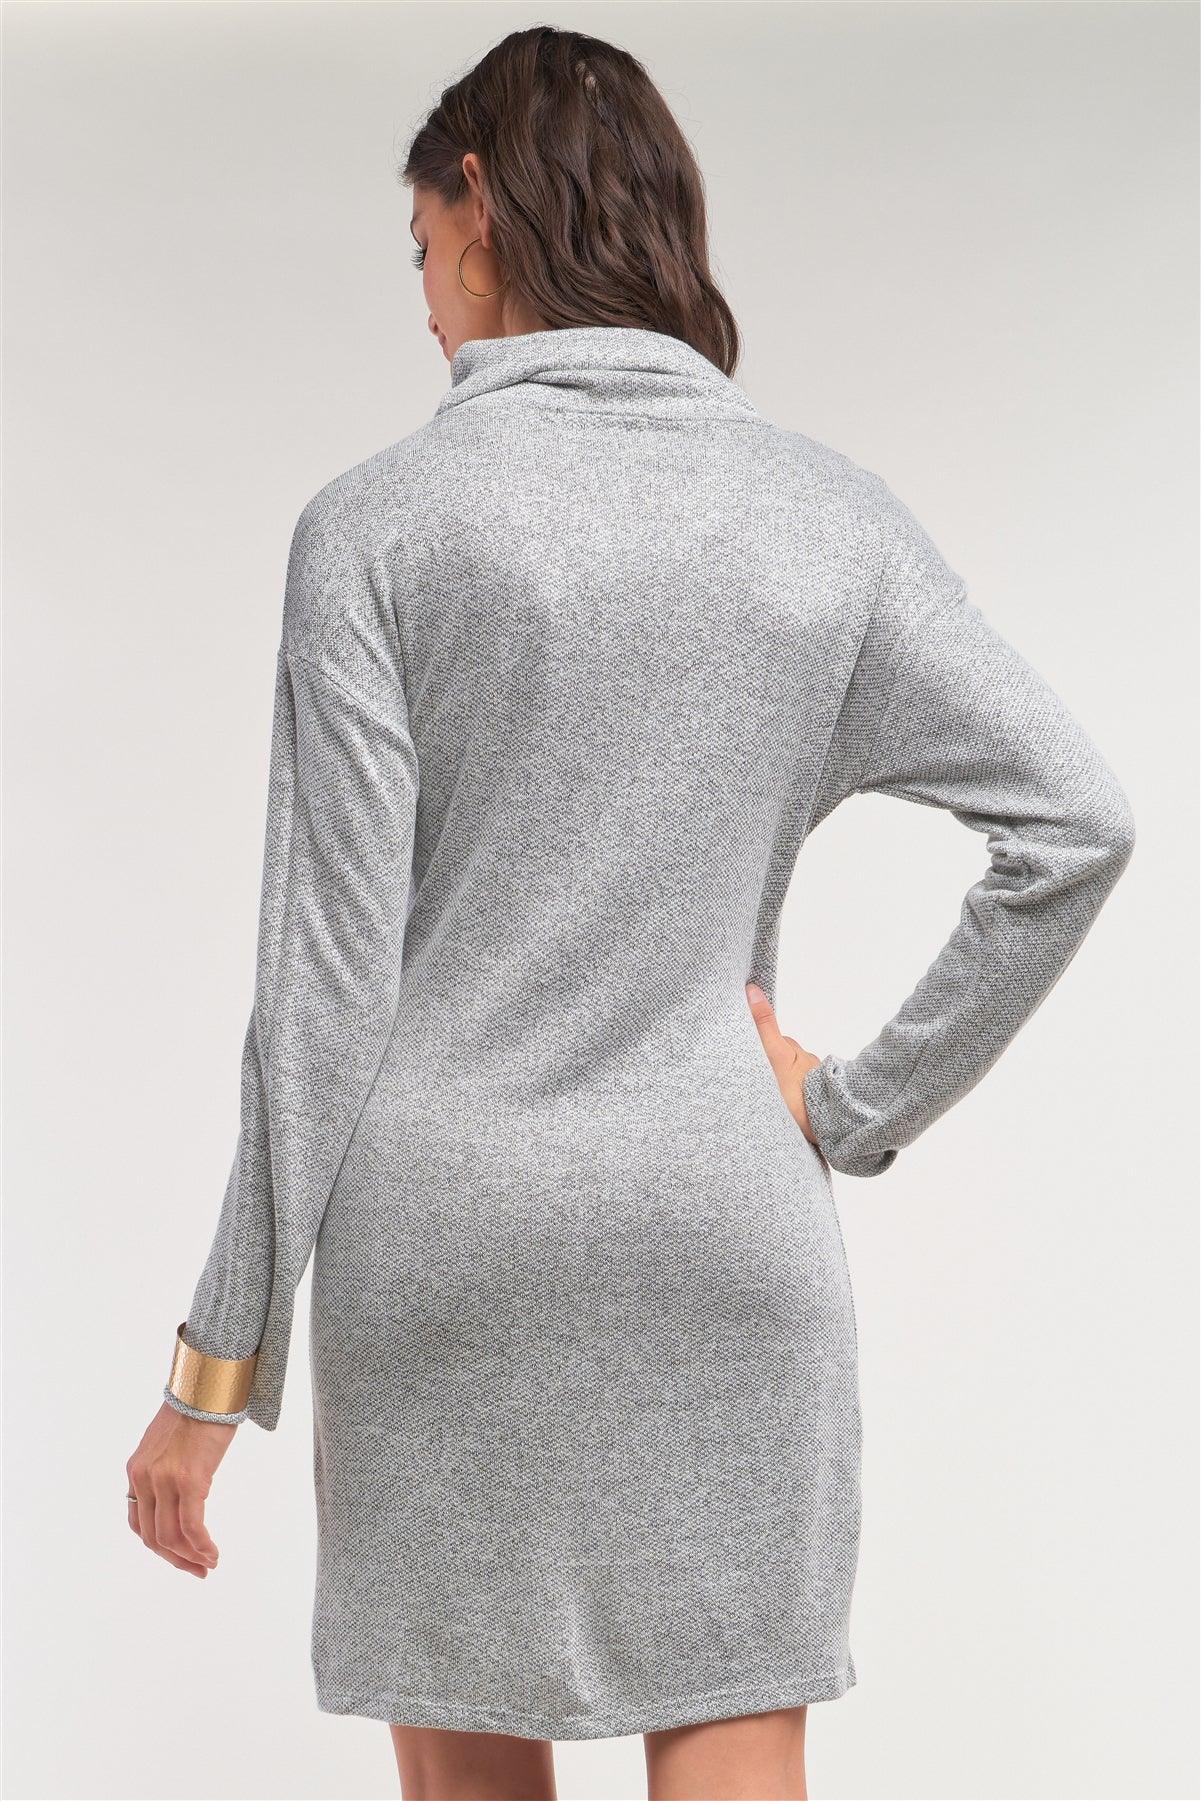 Heather Grey Knit Long Sleeve Turtleneck Self-Tie Waist Detail Mini Sweater Dress /2-2-2